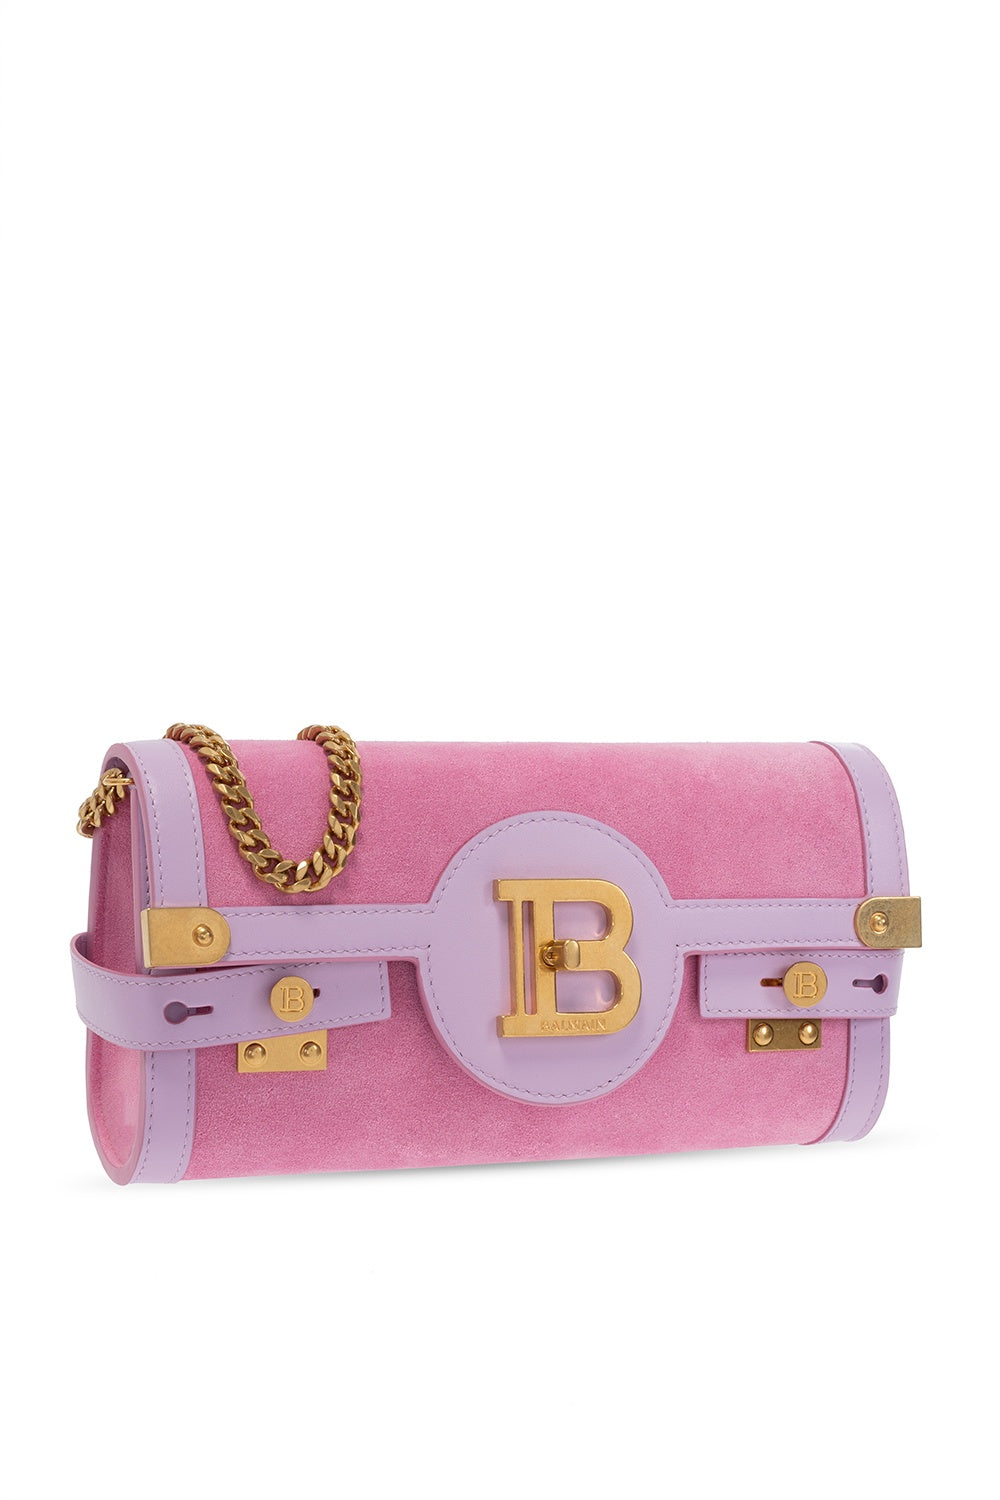 BALMAIN  Pink & Lilac Suede Shoulder Bag Veronique Luxury Collections